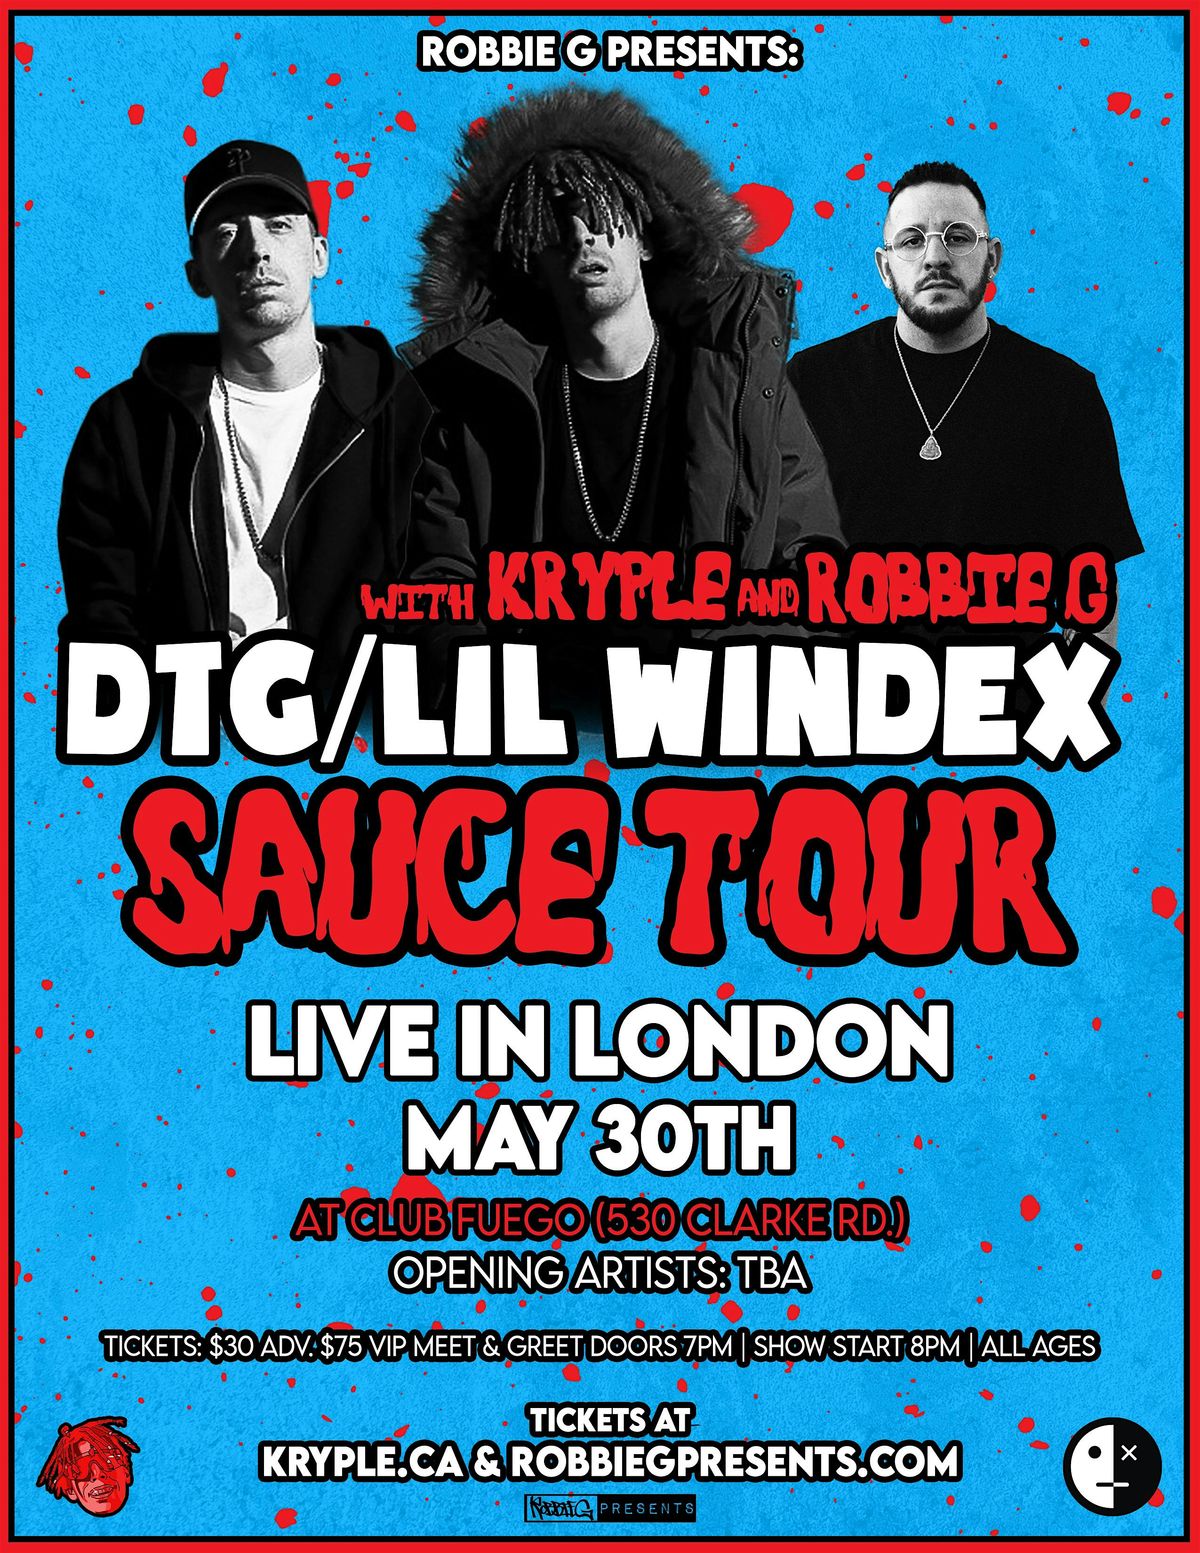 DTG\/Lil Windex Live in Kelowna July 1st at Kelowna Cruises with Kryple